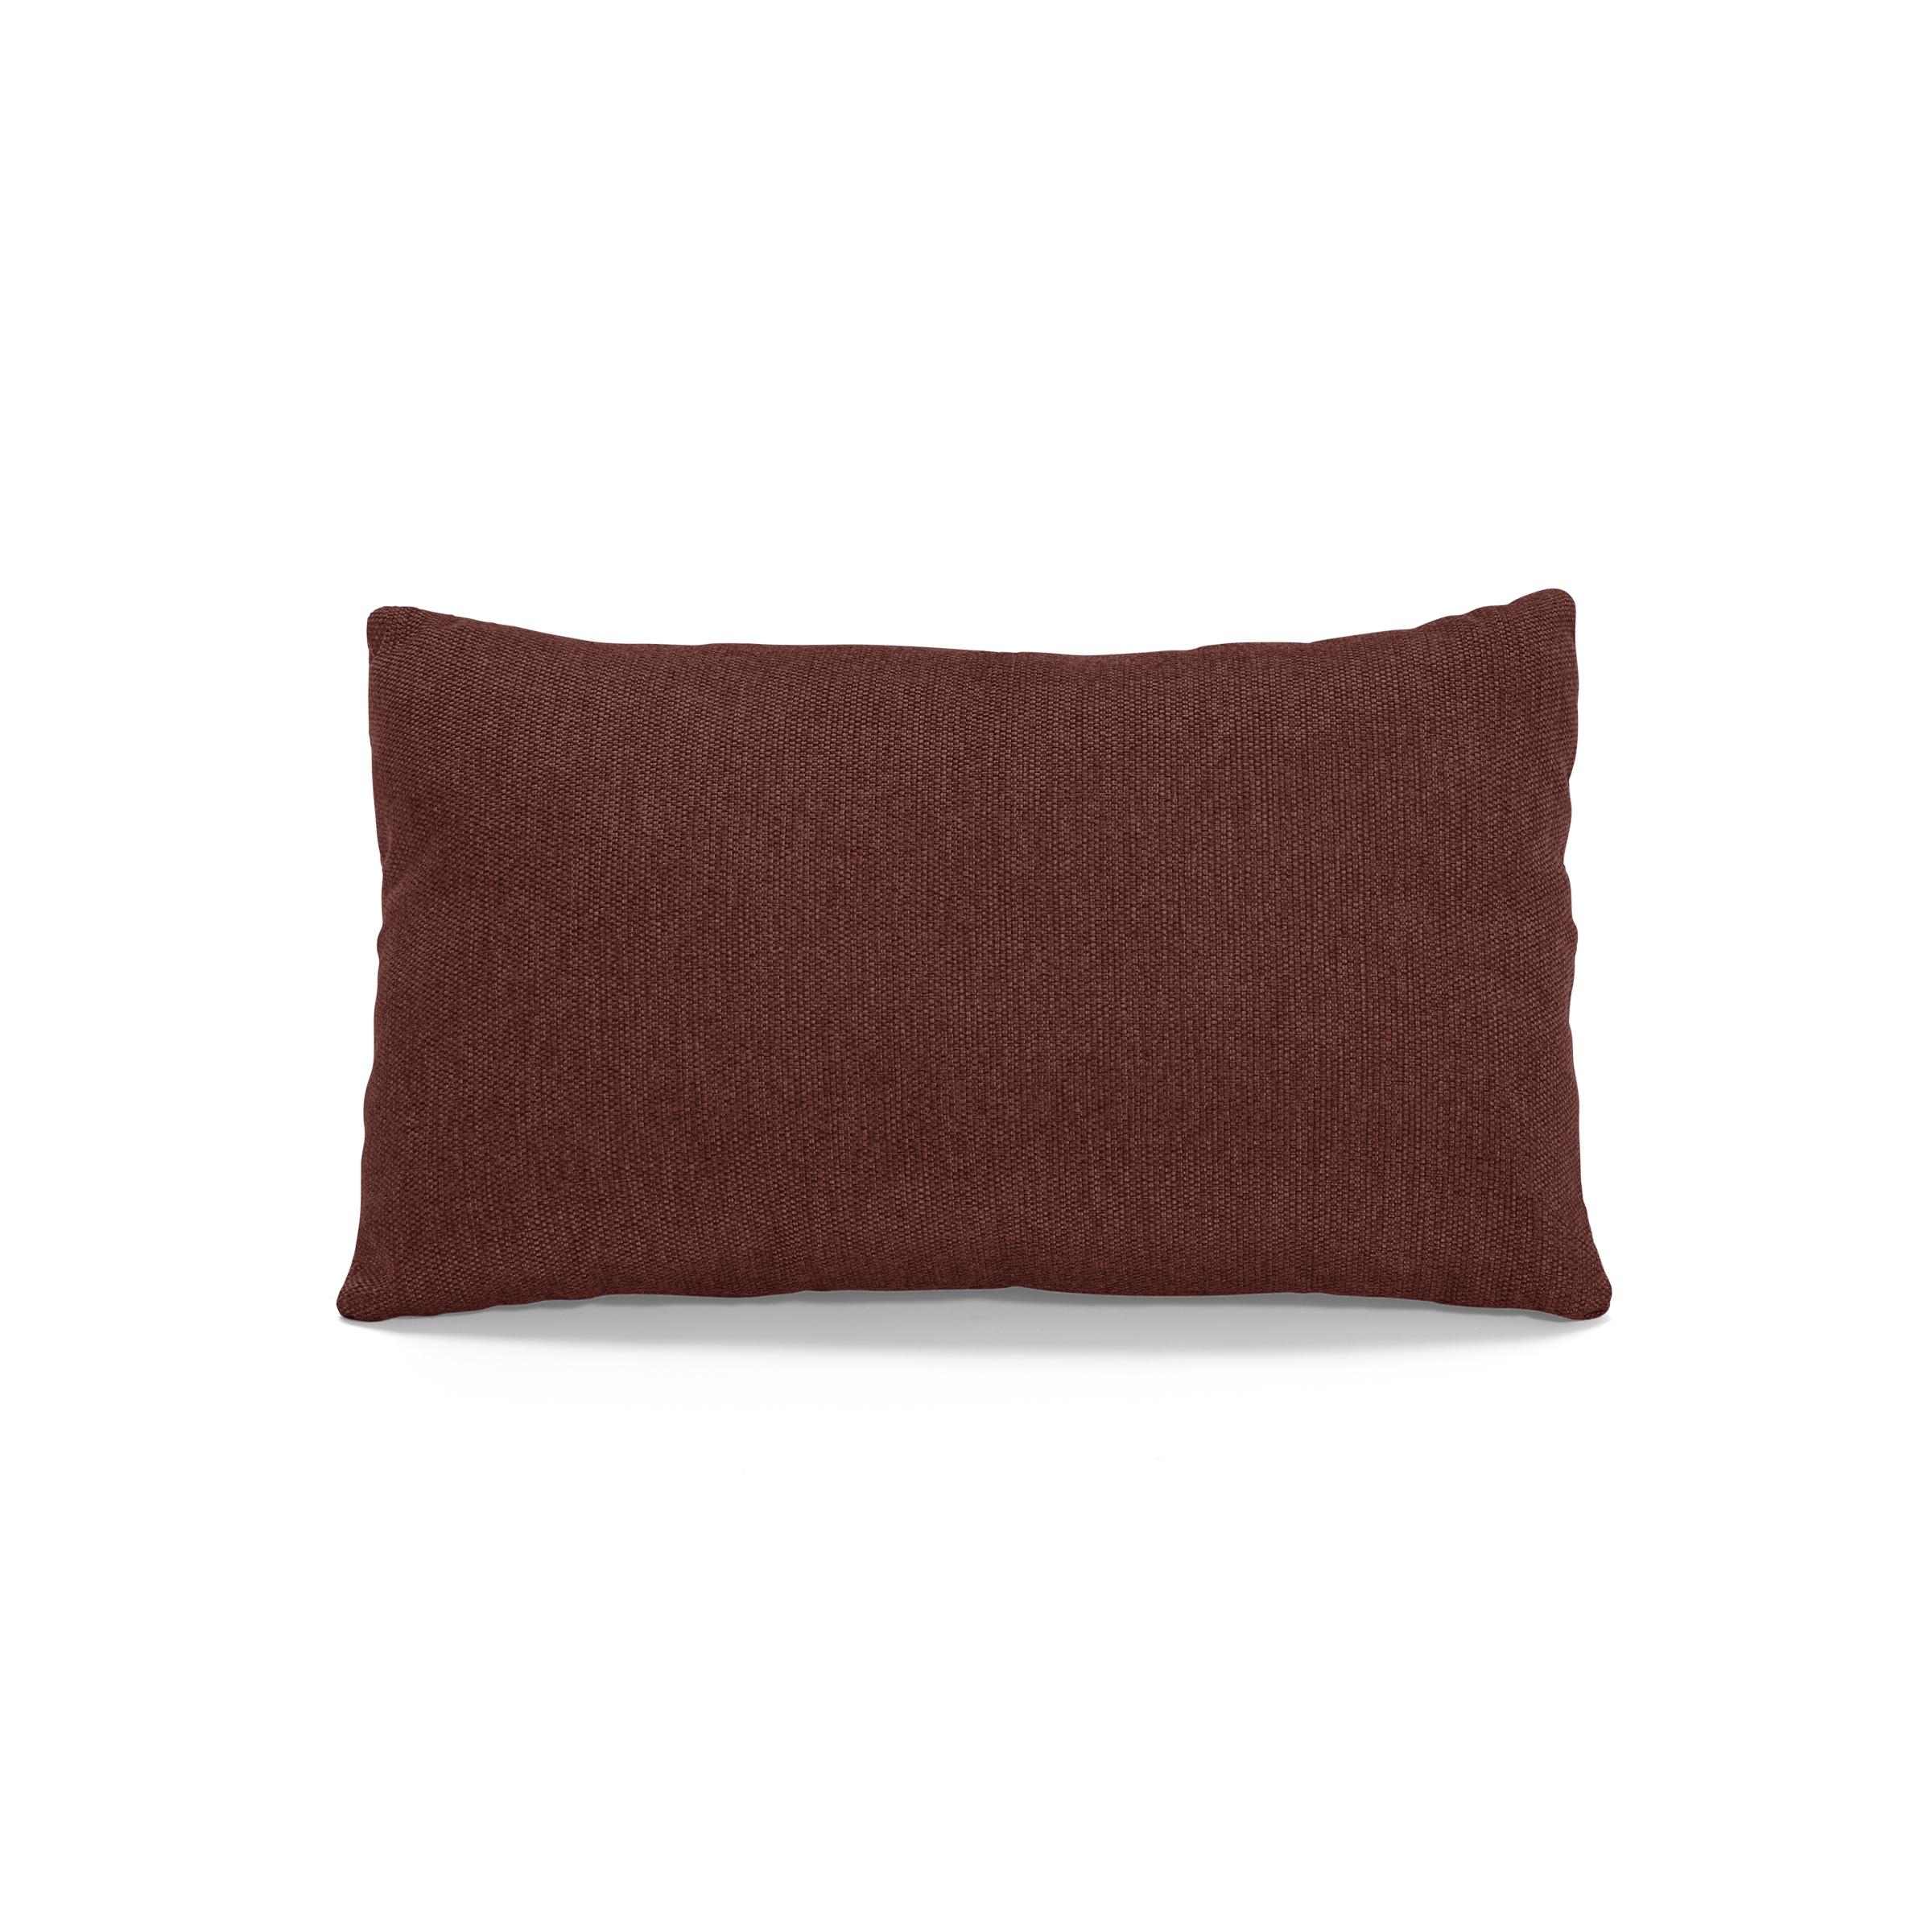 Nomad Lumbar Pillow in Brick Red - Image 0